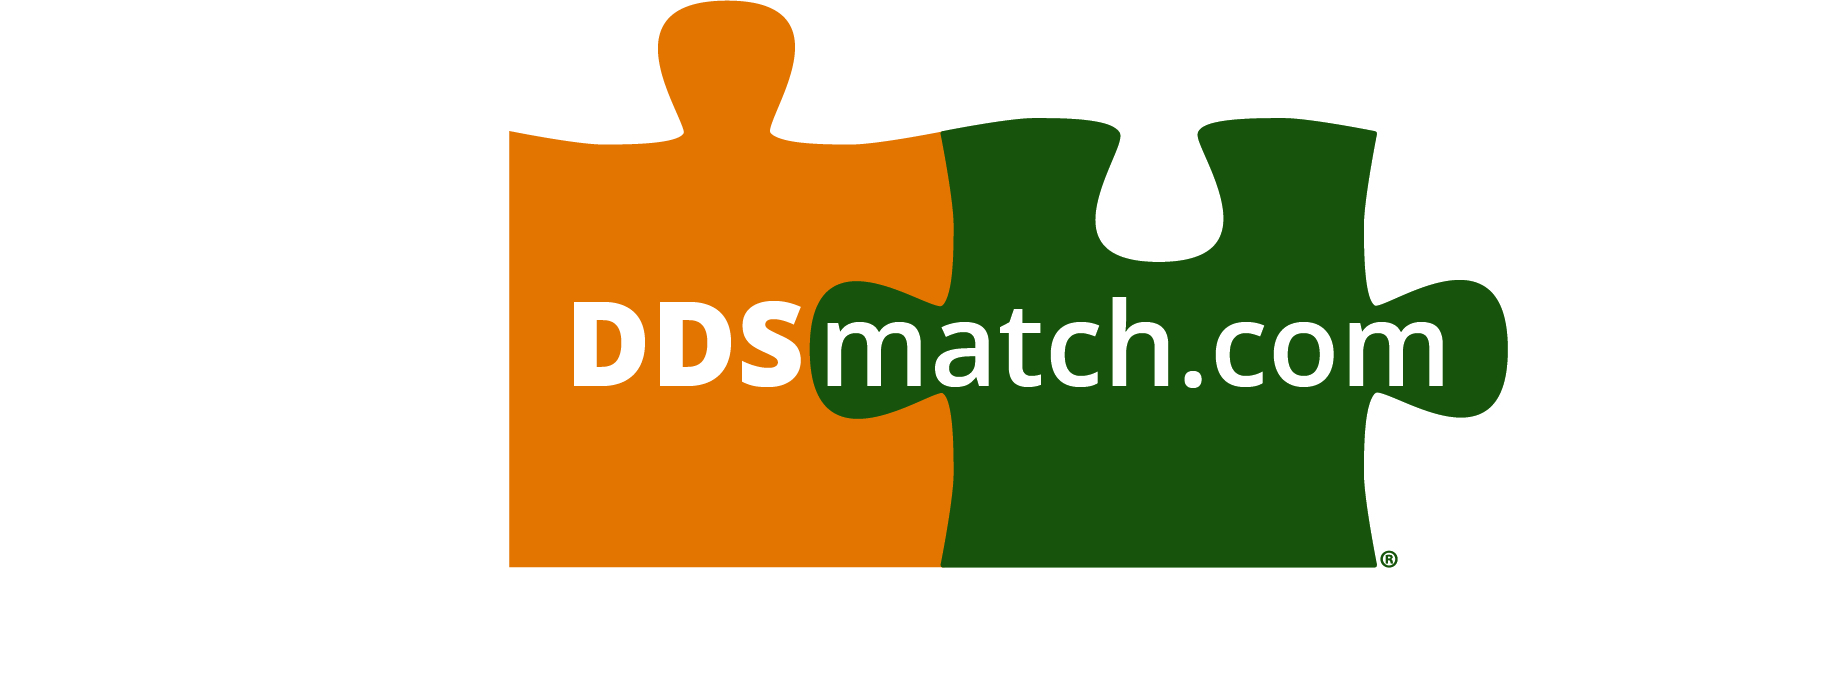 ddsmatch.com - Joe McGonigal Logo